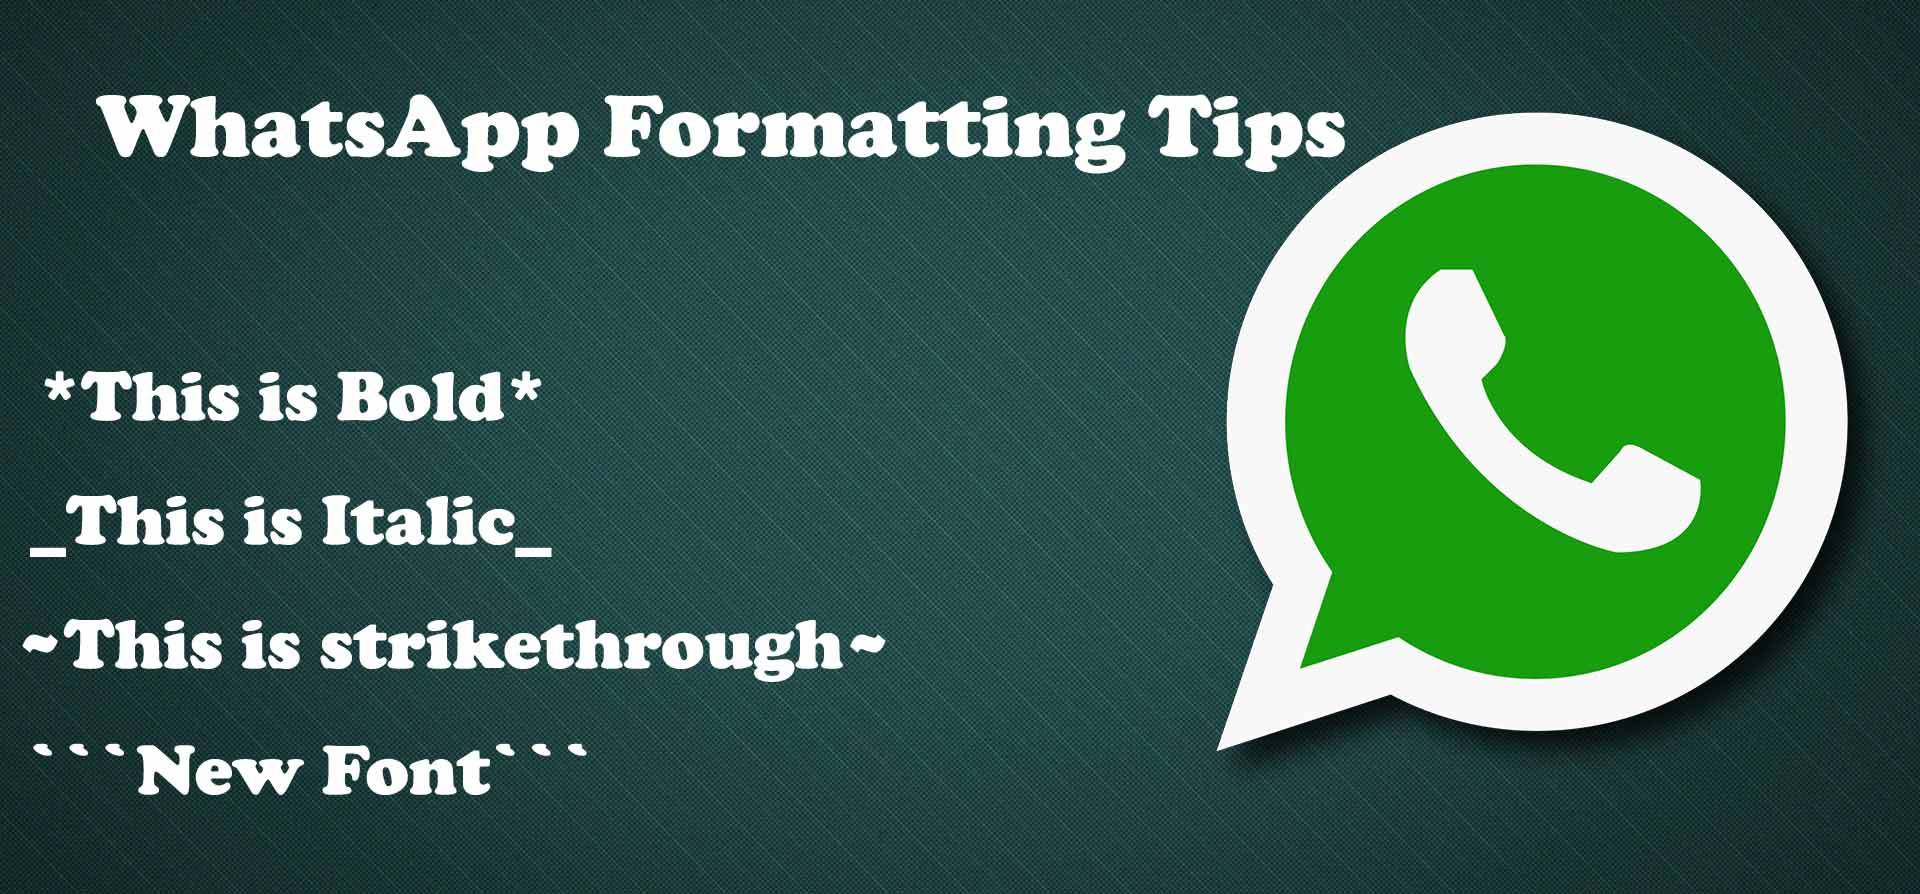 WhatsApp Formatting Tips